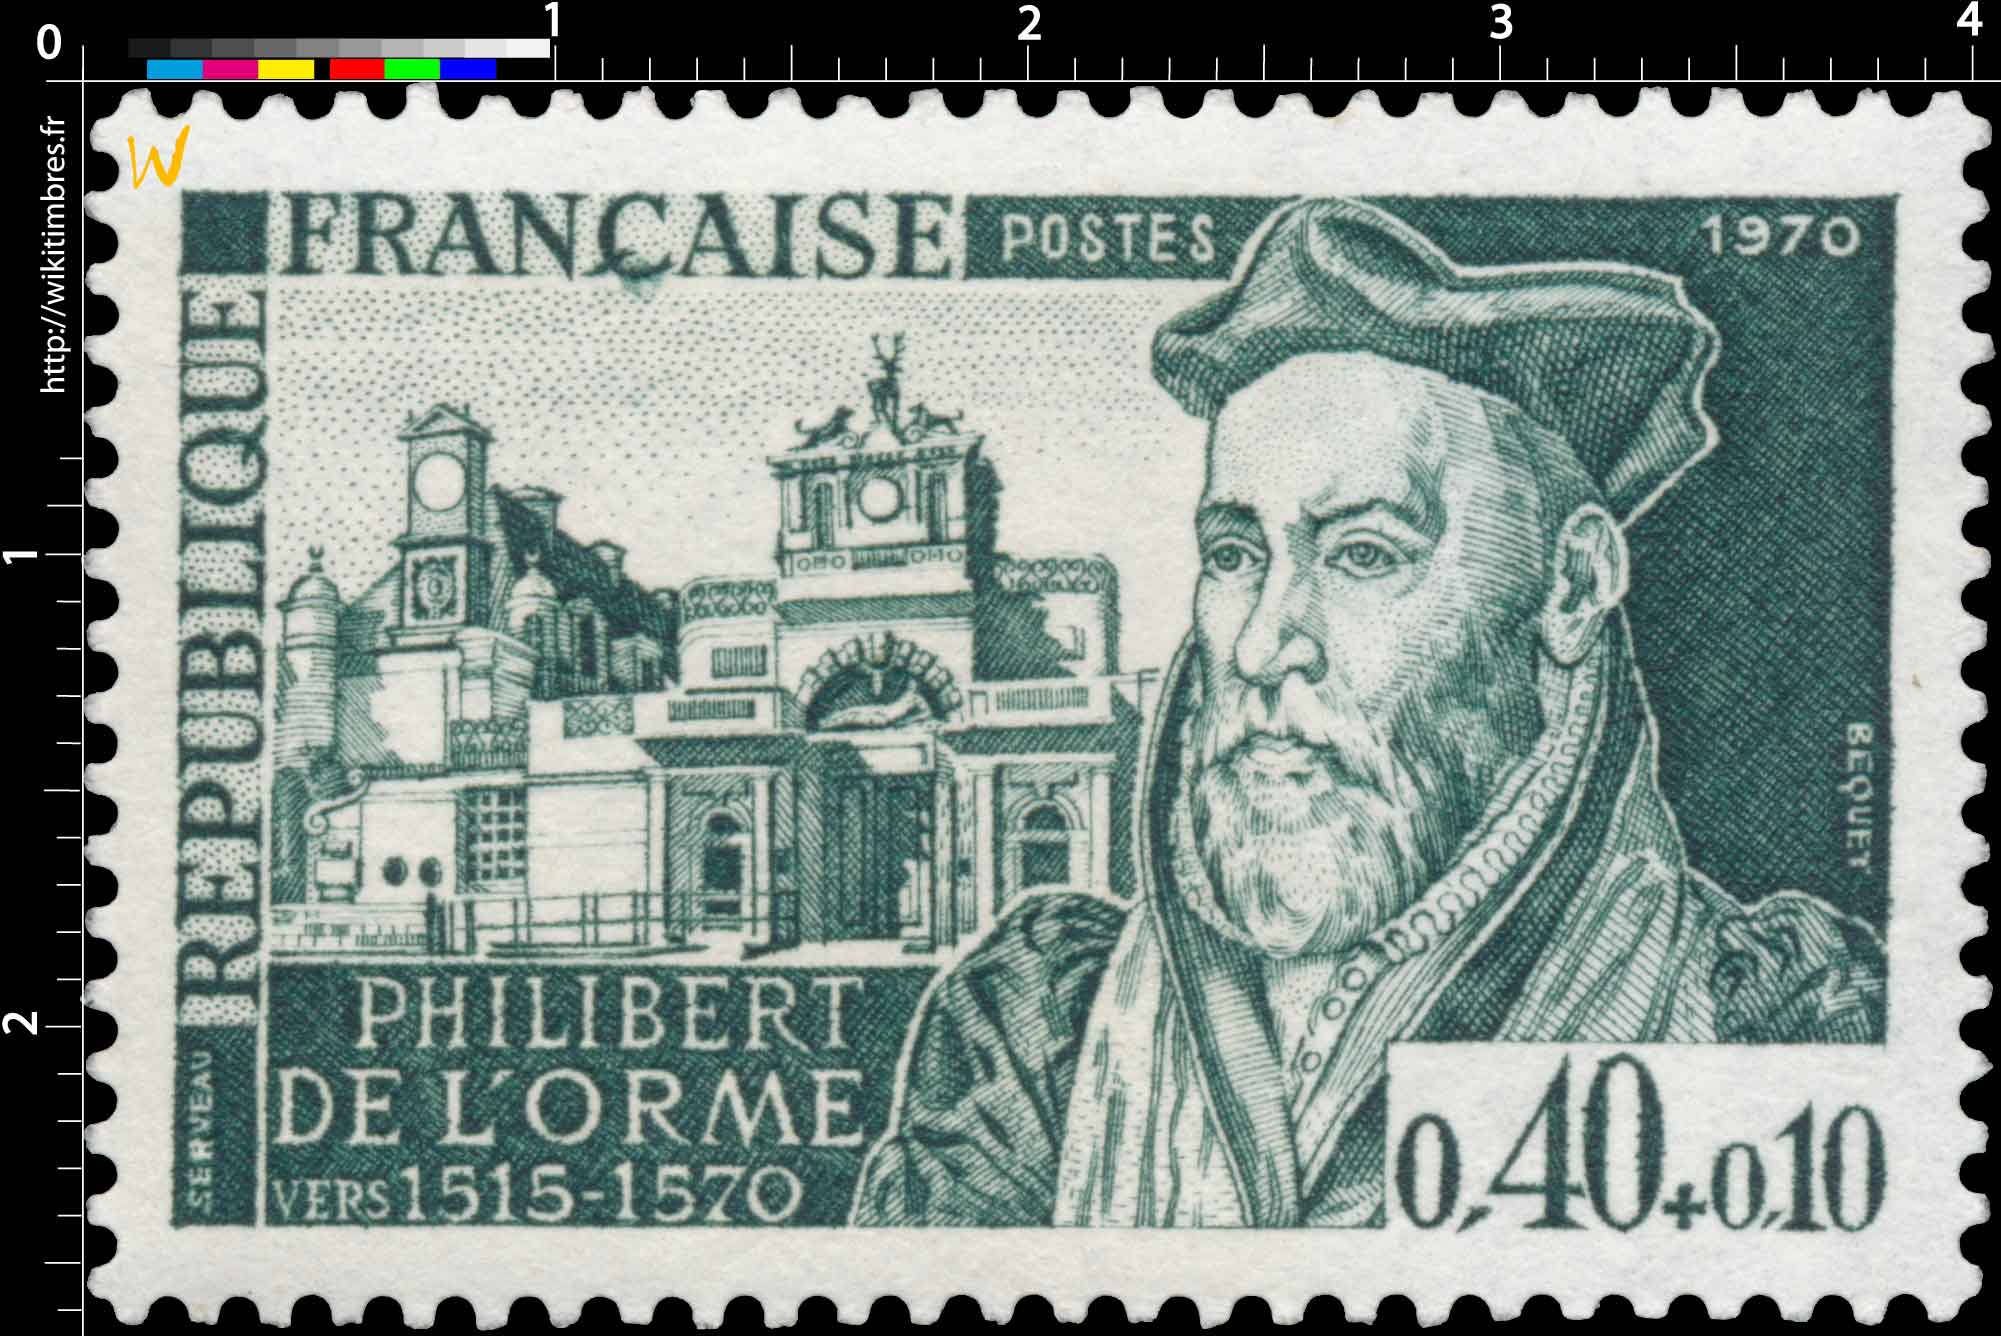 1970 PHILIBERT DE L'ORME VERS 1515-1570